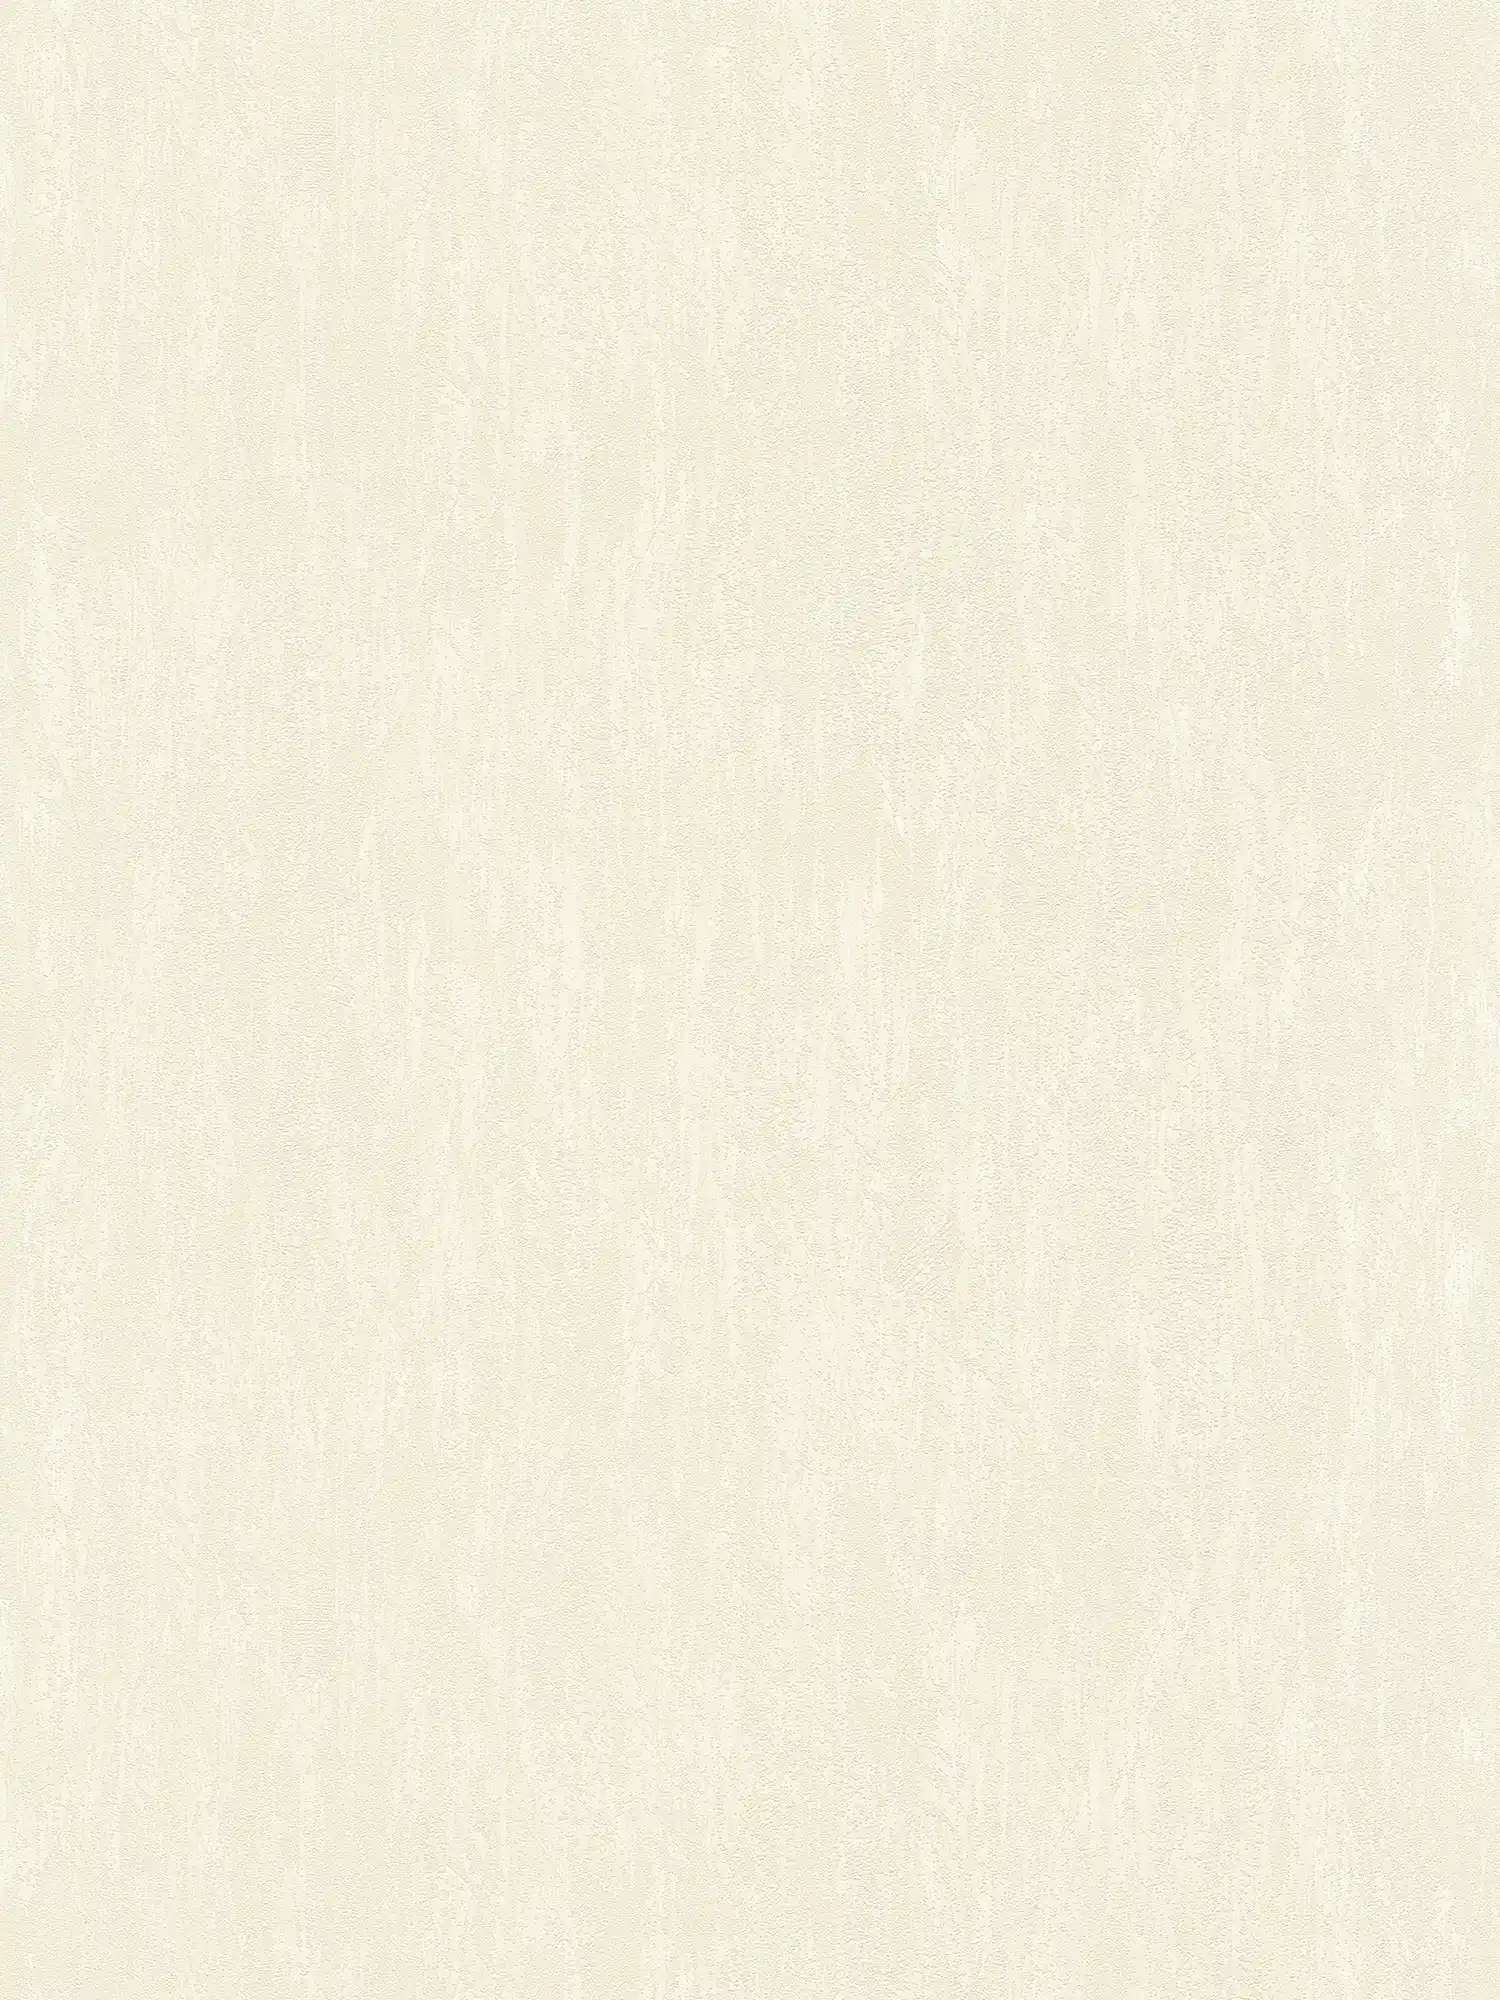 Neutral plain wallpaper in plaster look - cream
